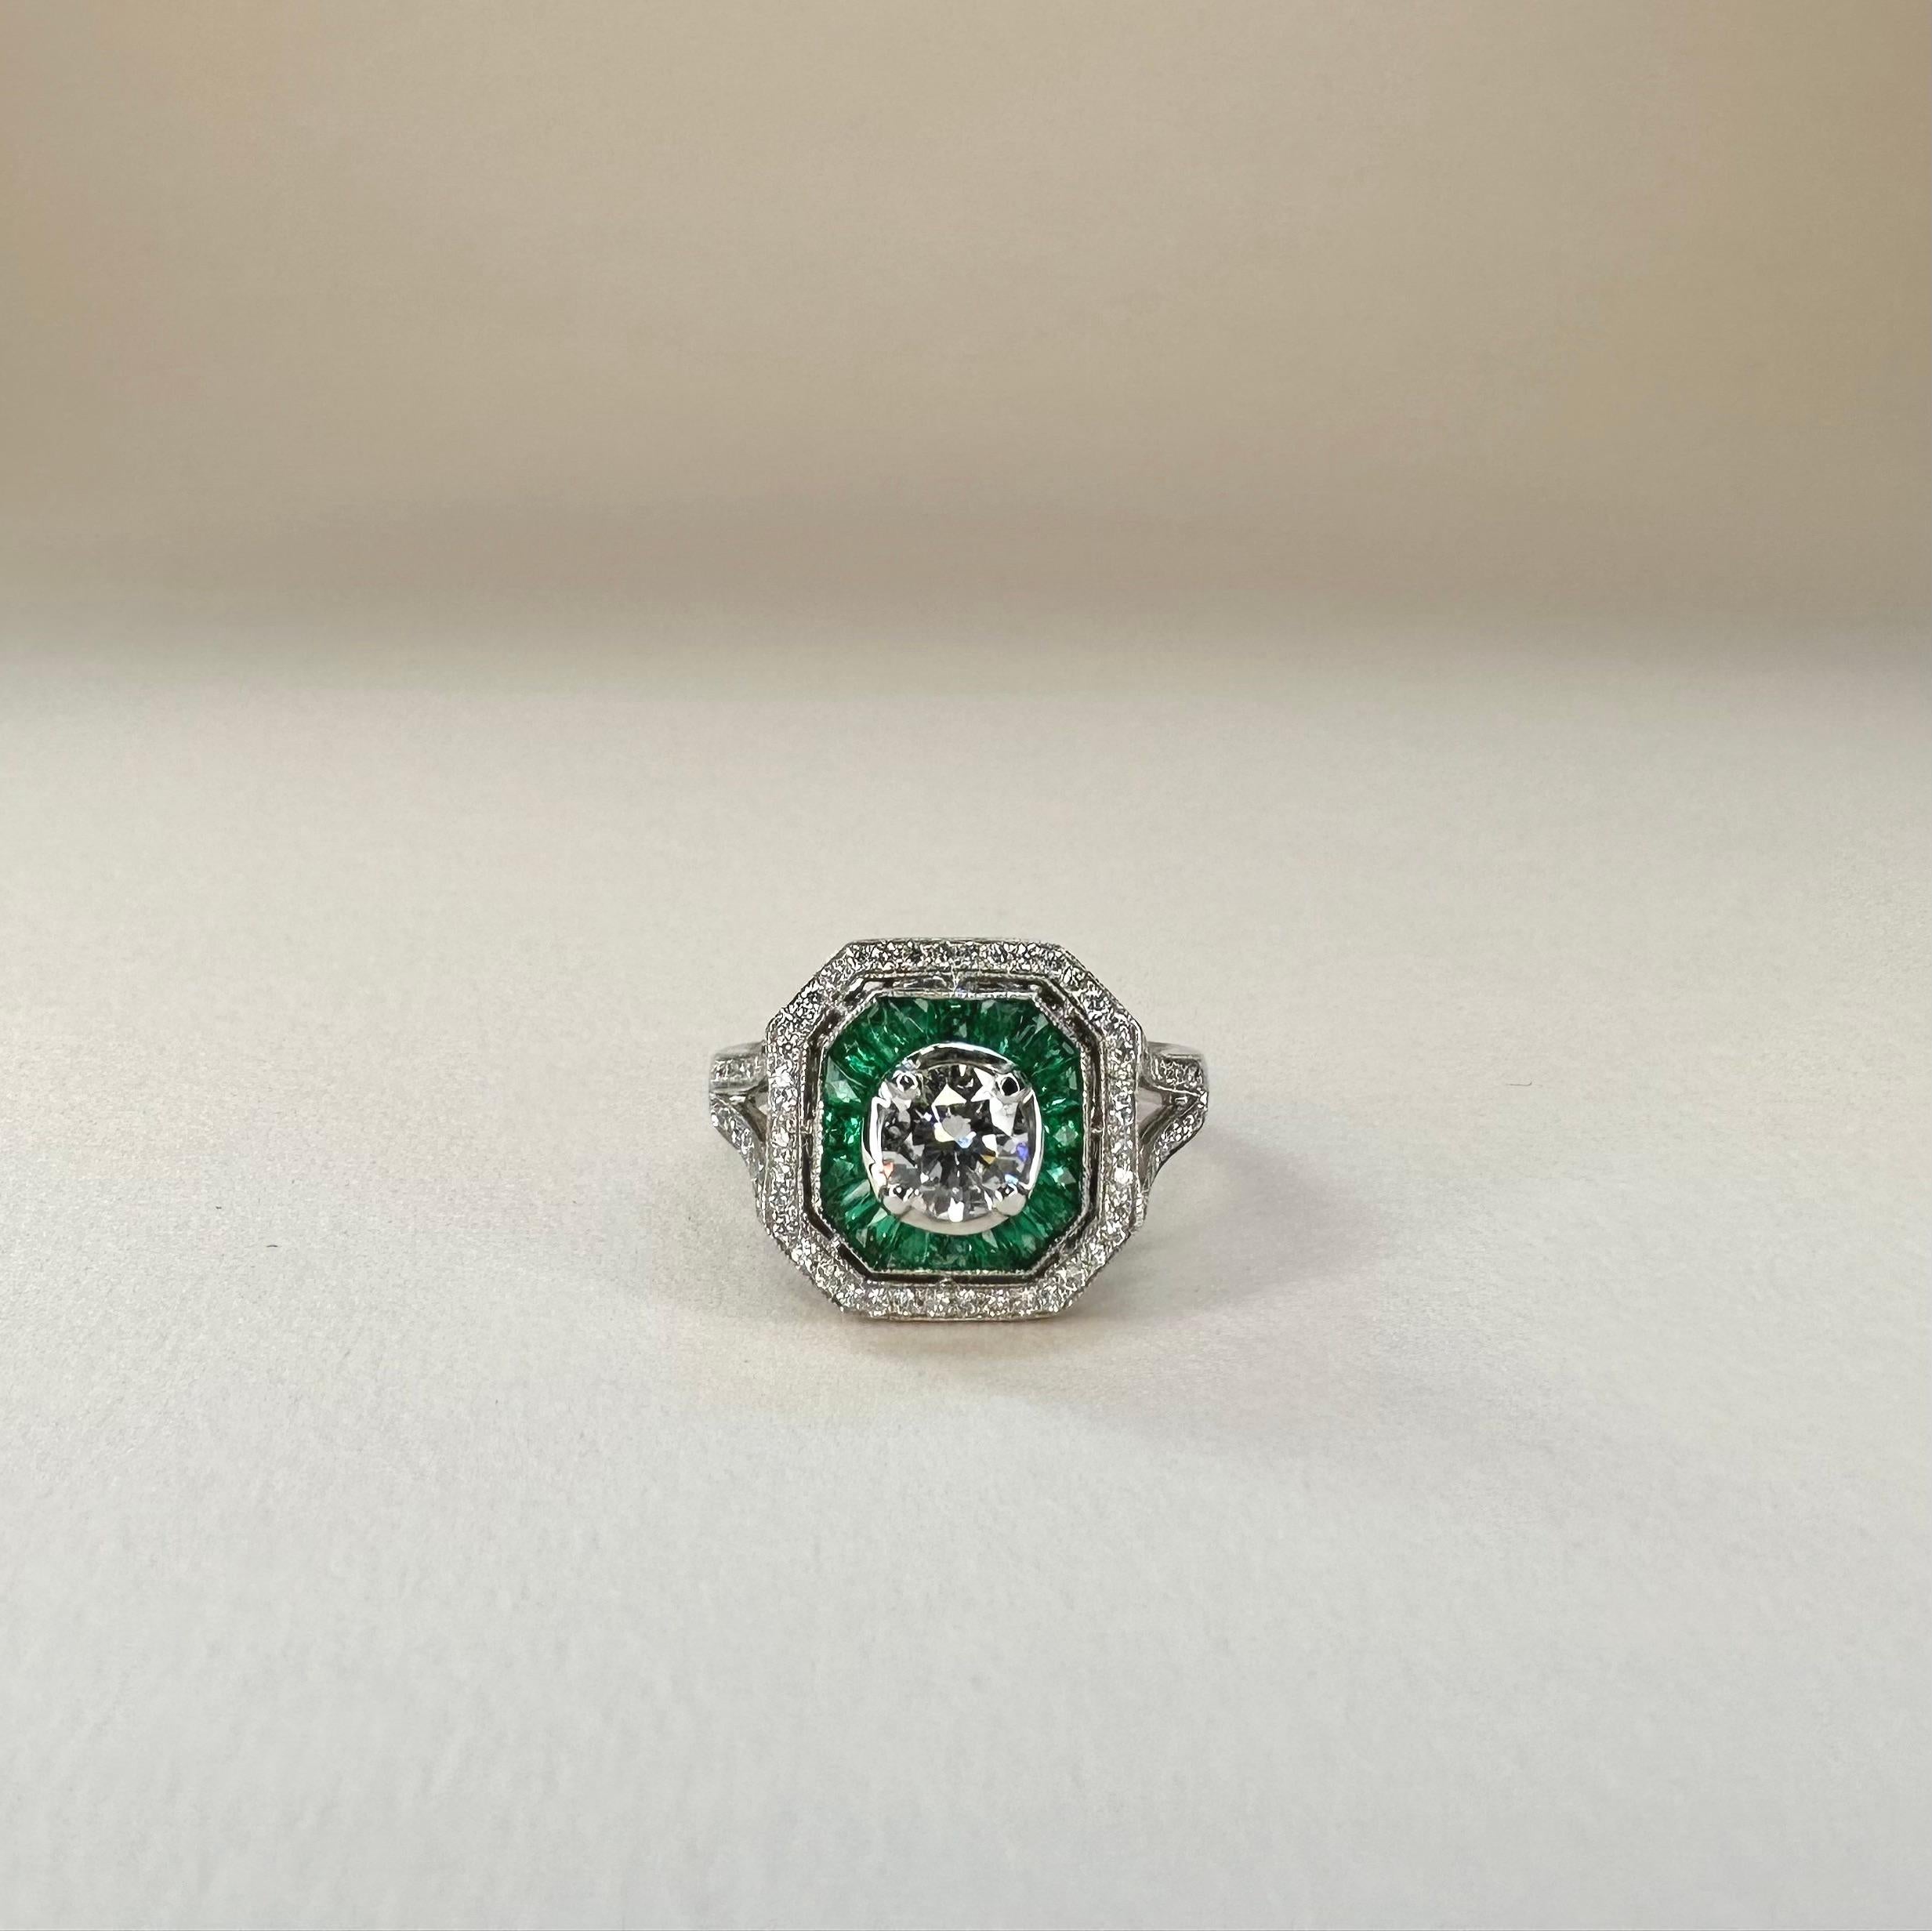 For Sale:  Platinum 0.30 Ct Vivid Green Calibre Cut Emerald with center 0.4 Ct Diamond Ring 5